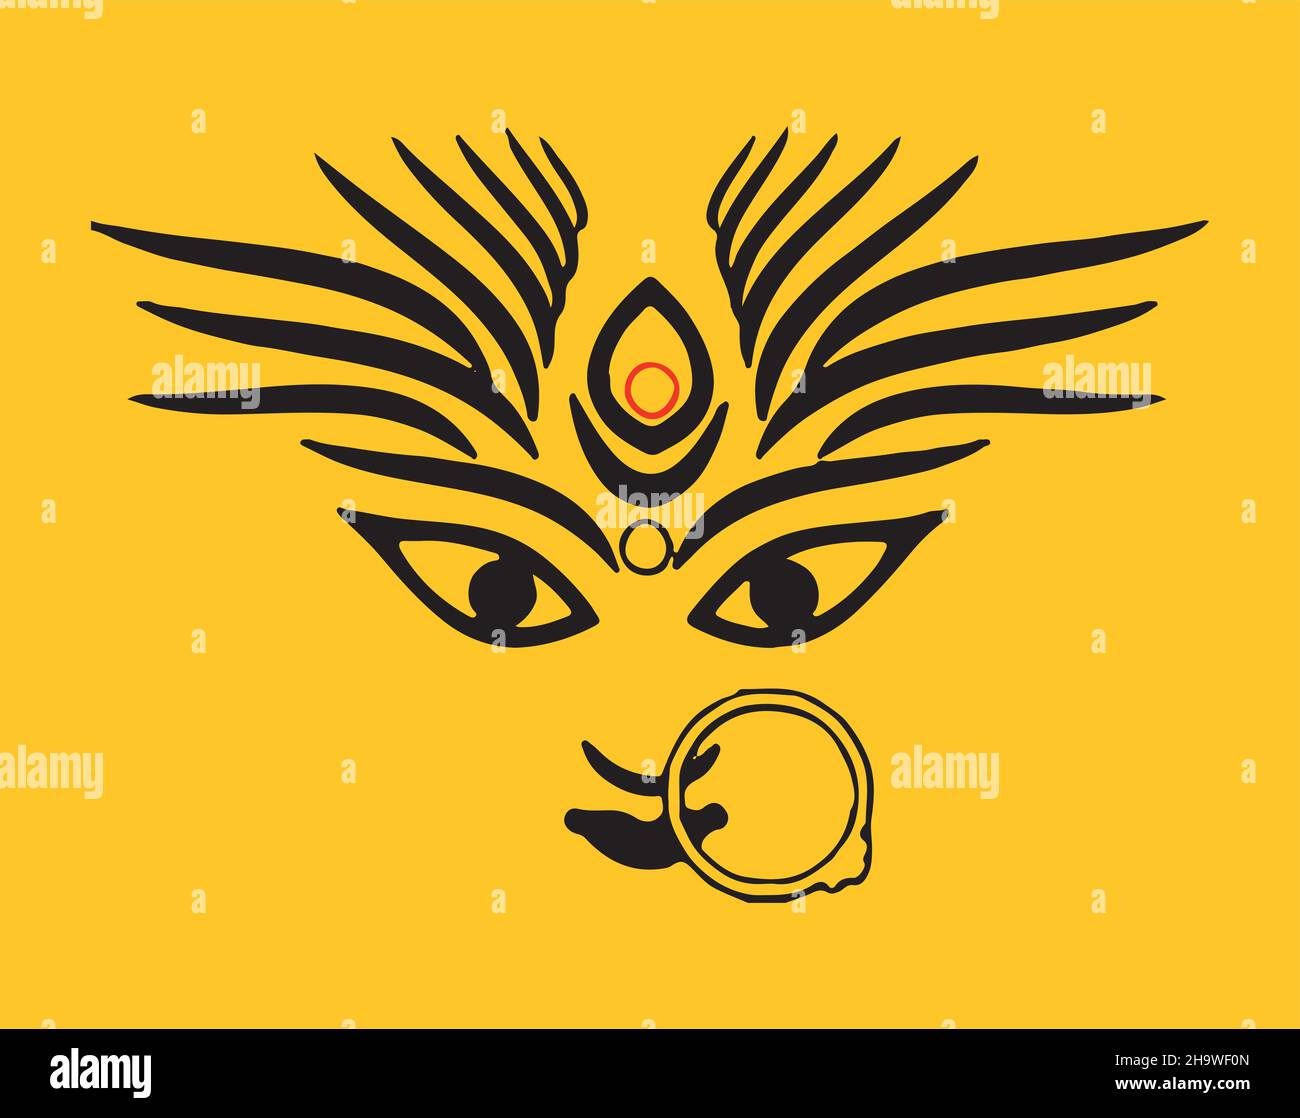 Durga matha hi-res stock photography and images - Alamy